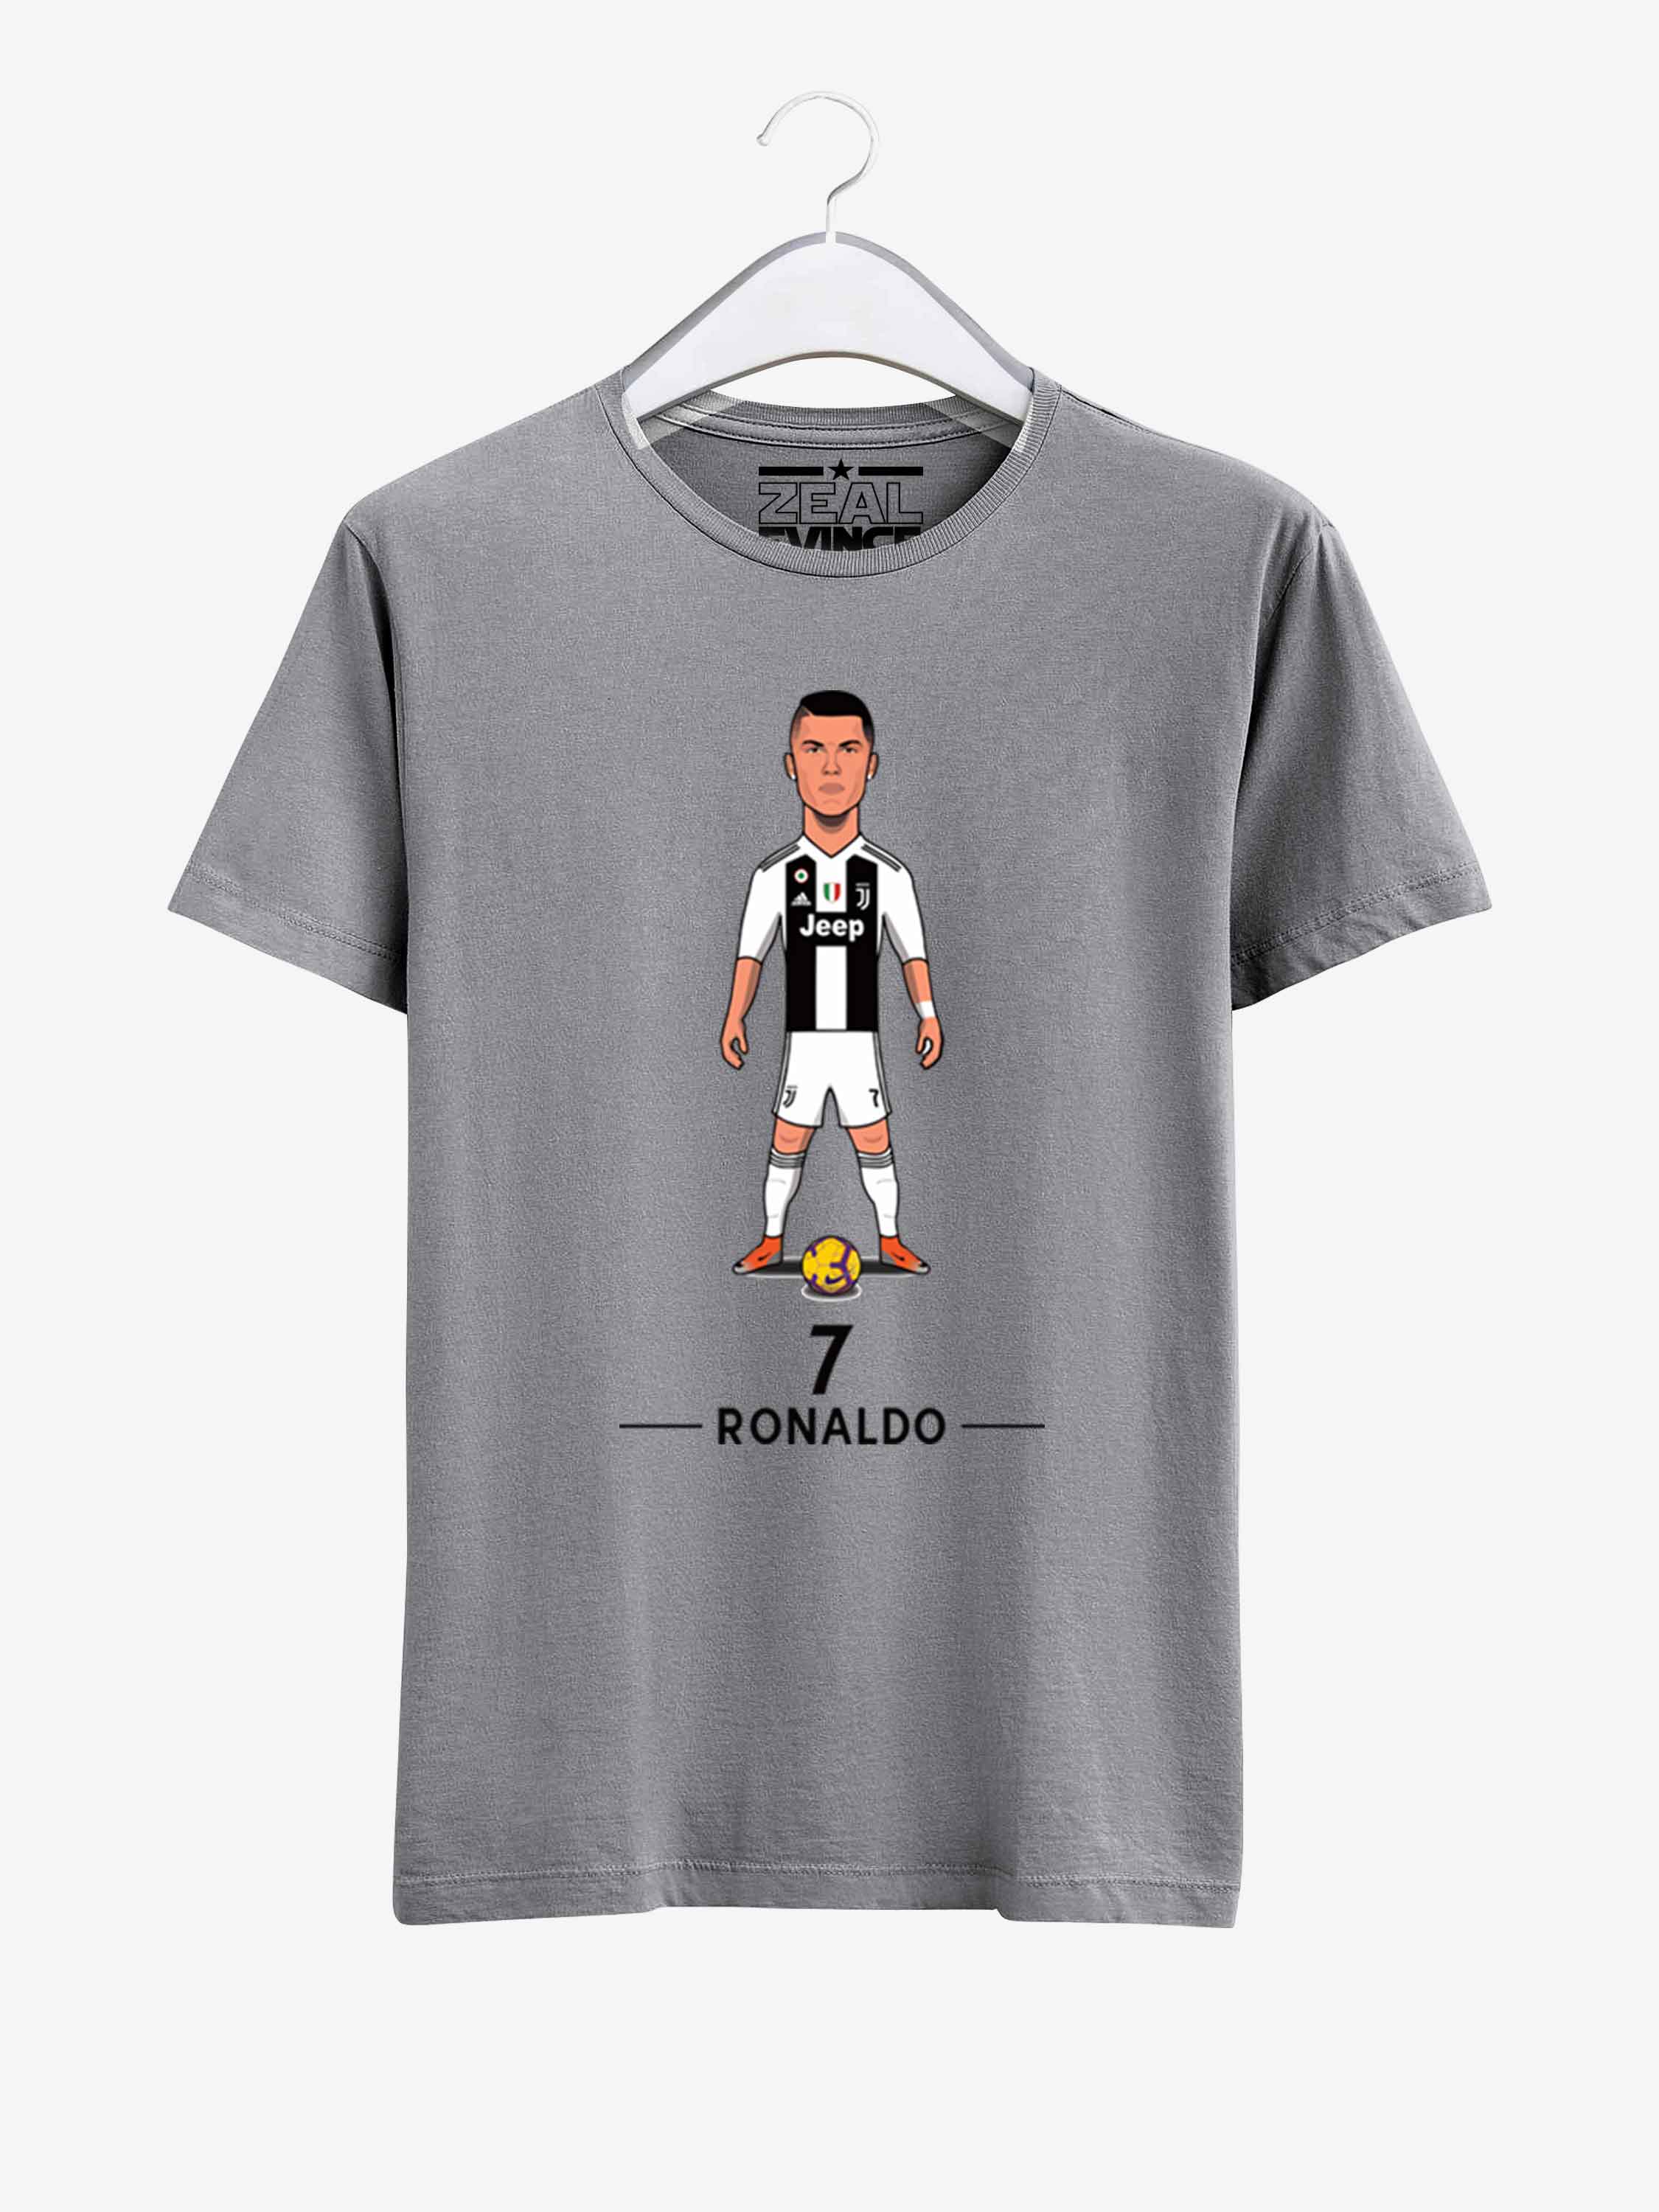 Cristiano Ronaldo In T Shirt - juventus home jersey 2019 20 ronaldo roblox